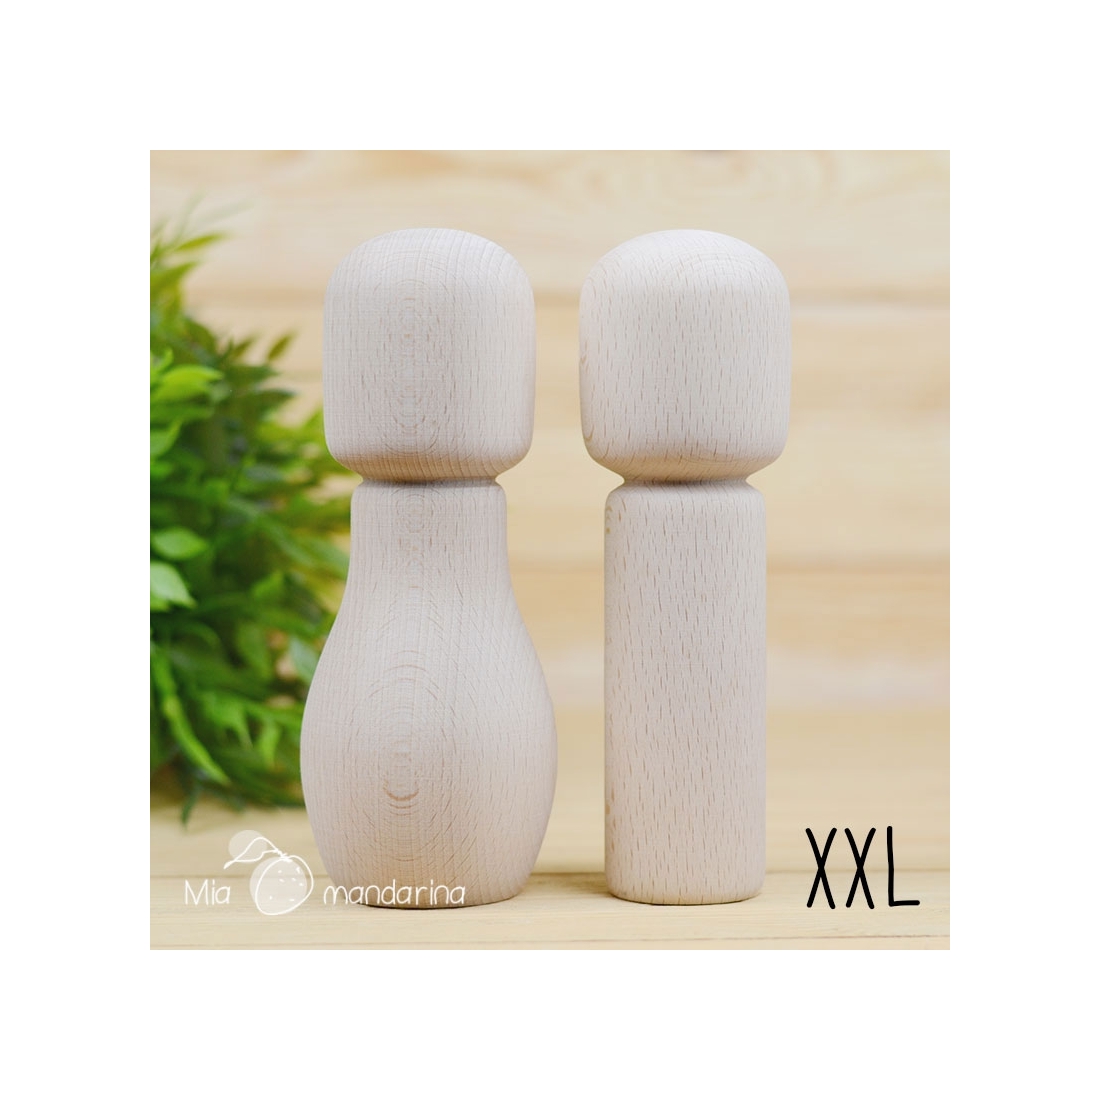 XXL Peg doll - Pareja 14.5 cm